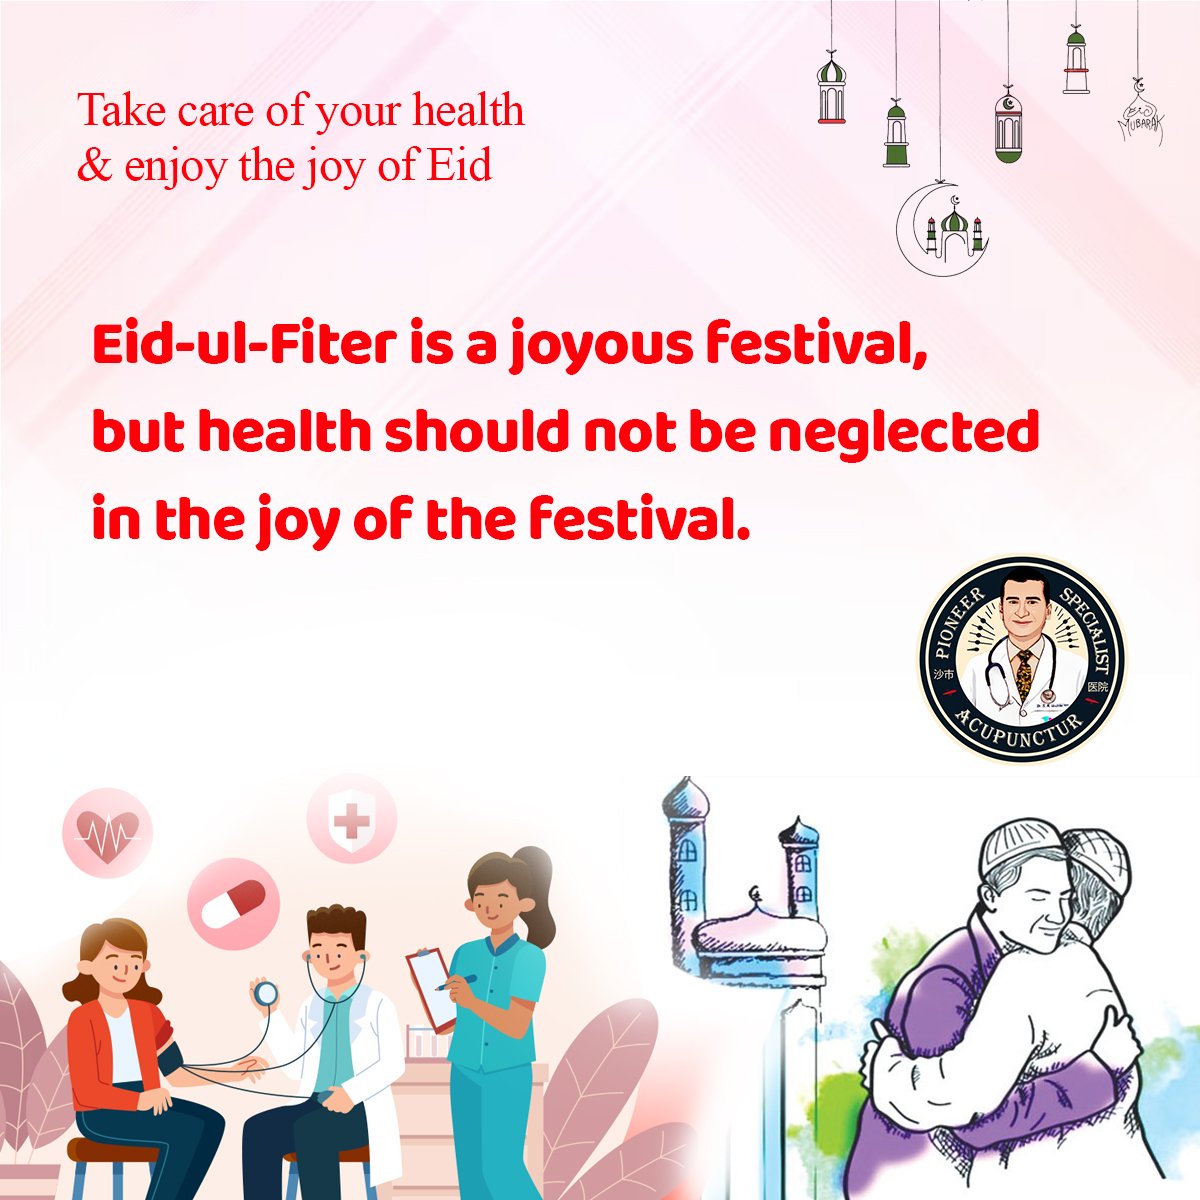 Take care of your health during Eid-ul-Fiter

#HealthyEid #EidWellness #FeastandFitness #BalanceForEid #MindfulEidFeast
#SweetTreatsInModeration #EidHydration #PostRamadanReset #DiabeticEid #HeartHealthyEid #FitFamilyEid